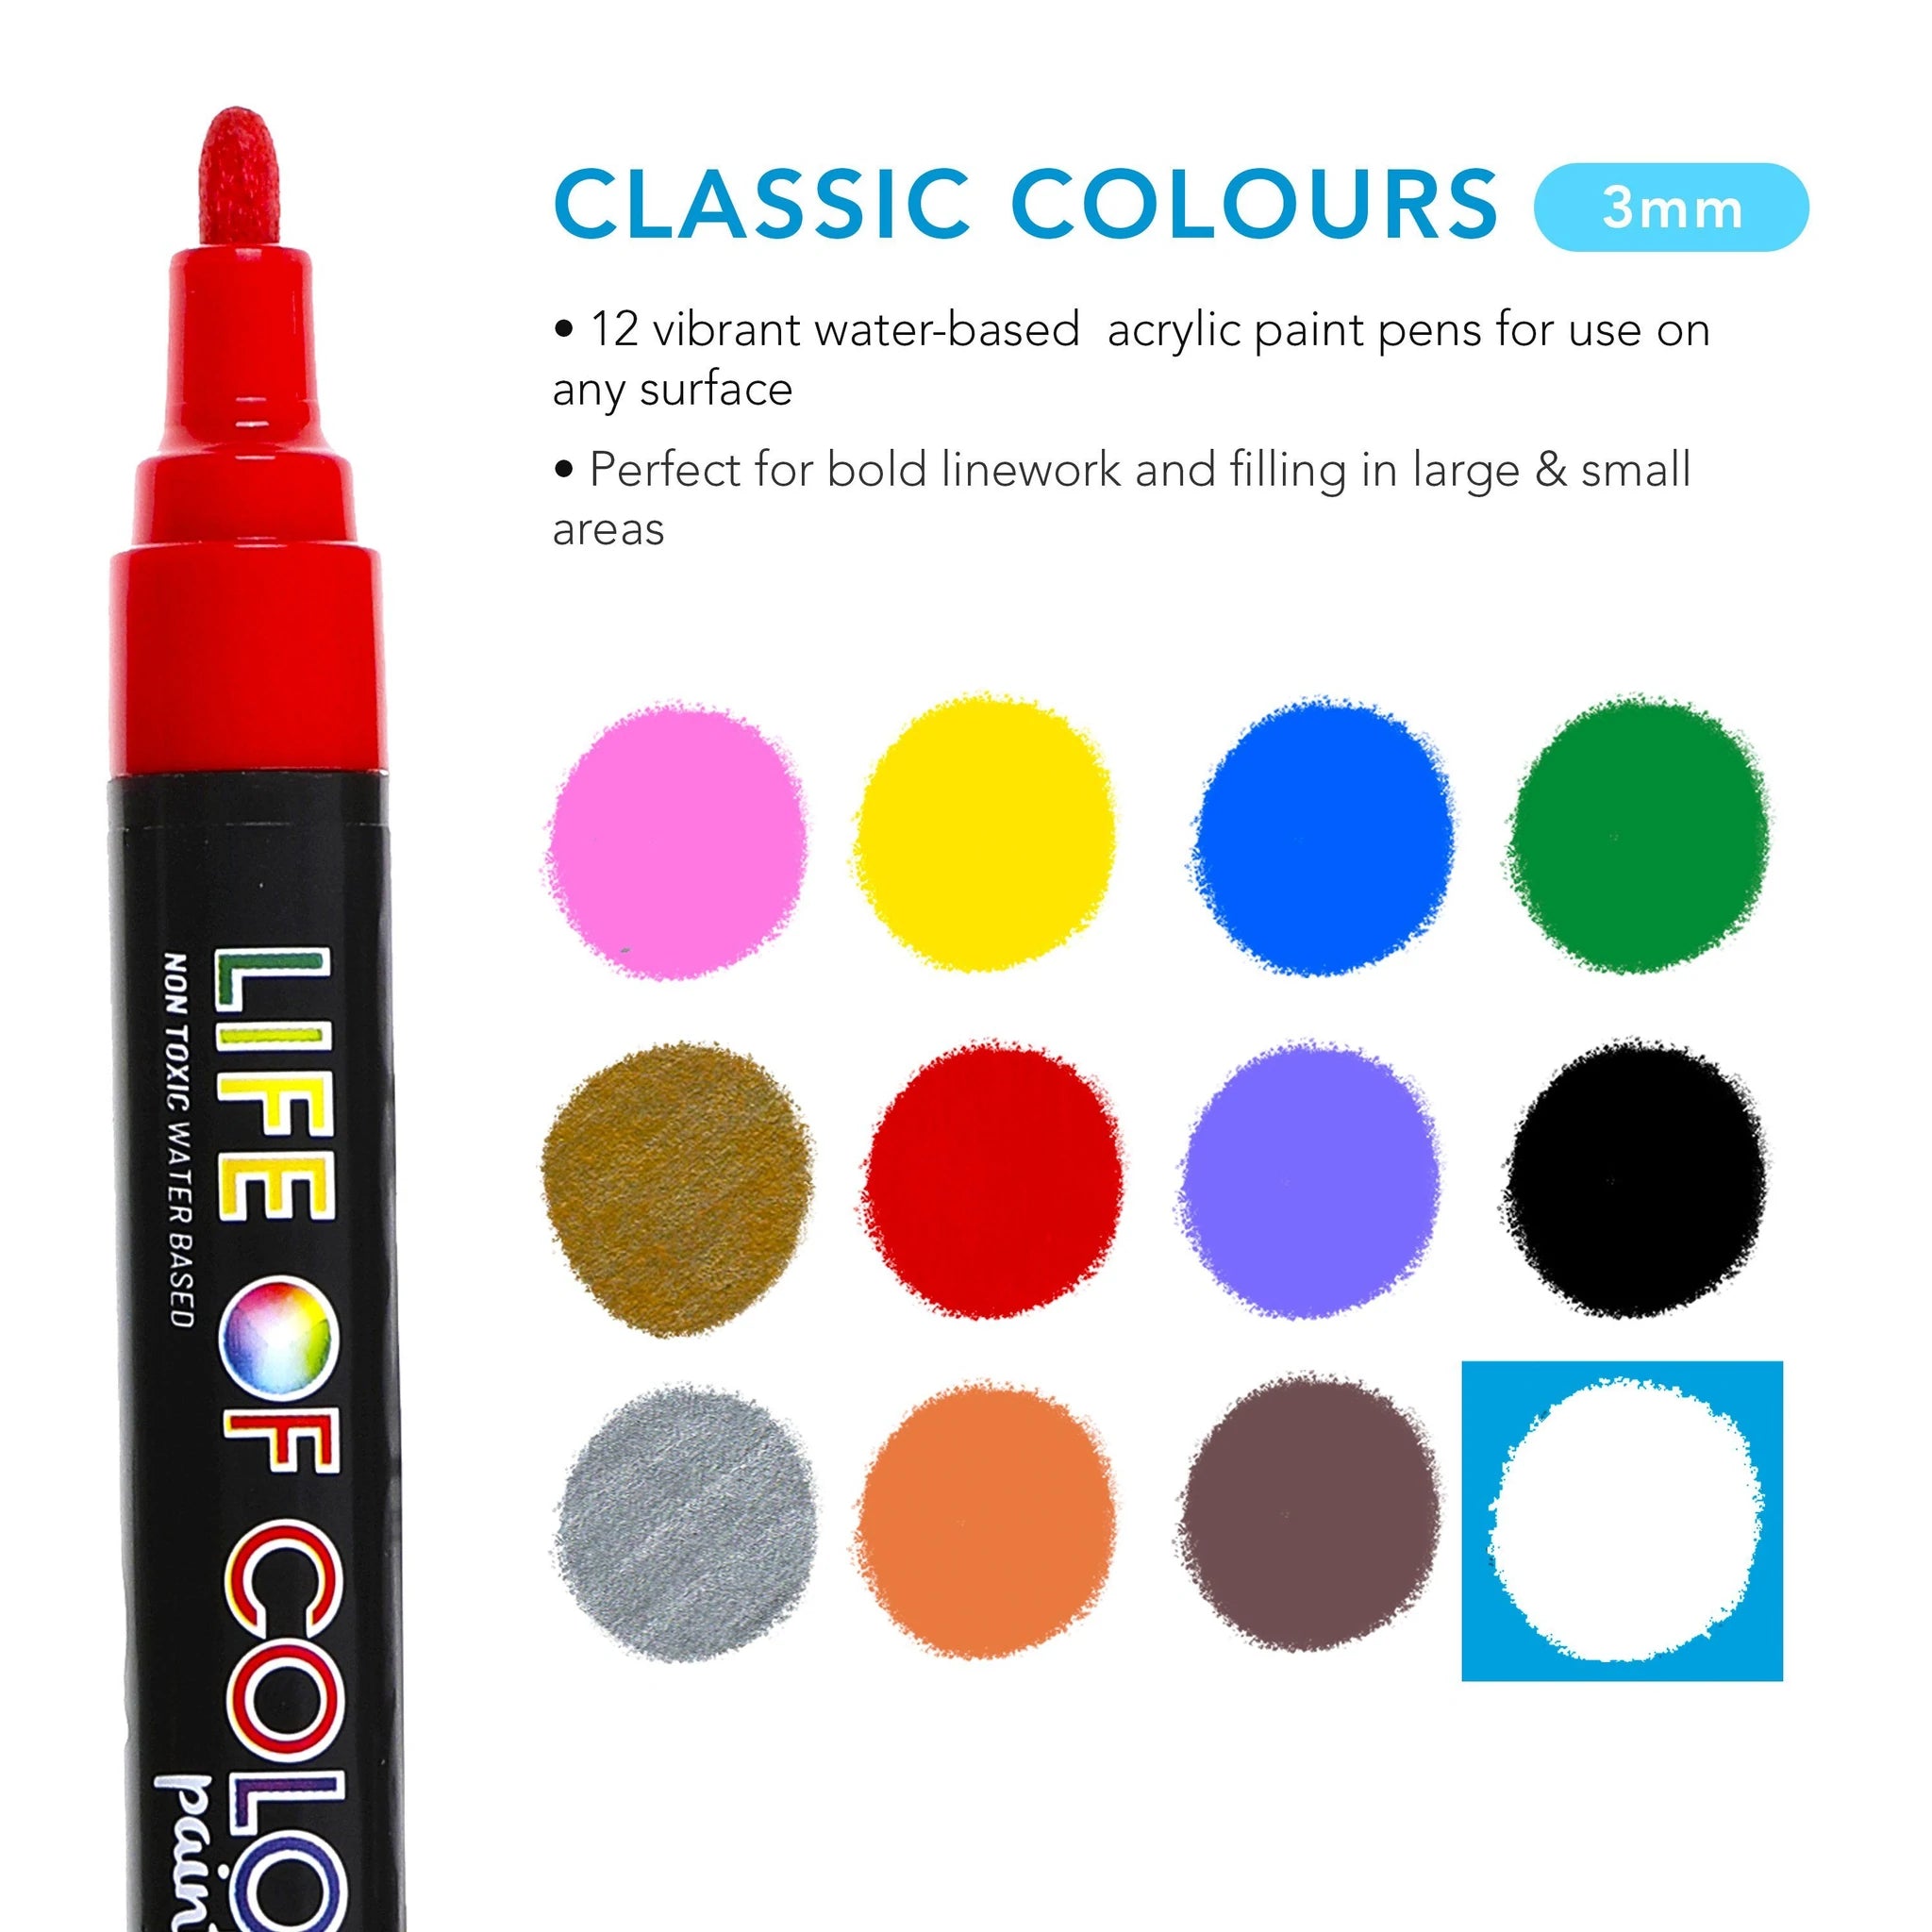 Life of Colours Classic Colours 3mm Medium Tip Acrylic Paint Pens - Set of 12